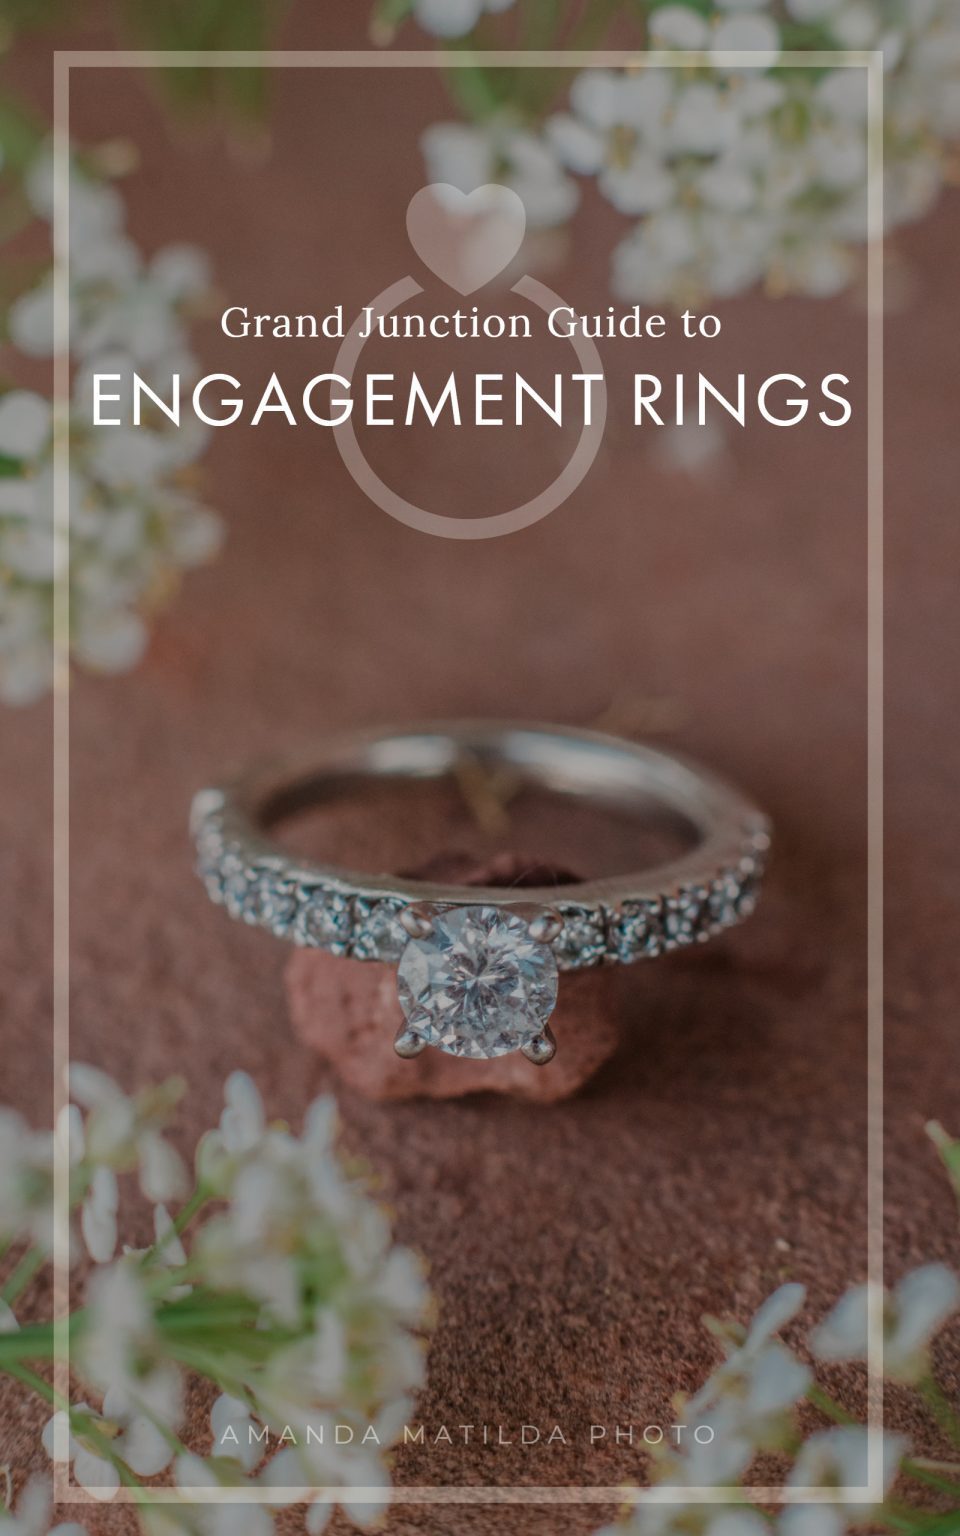 Grand Junction Guide to Engagement Rings - Amanda Matilda Photography